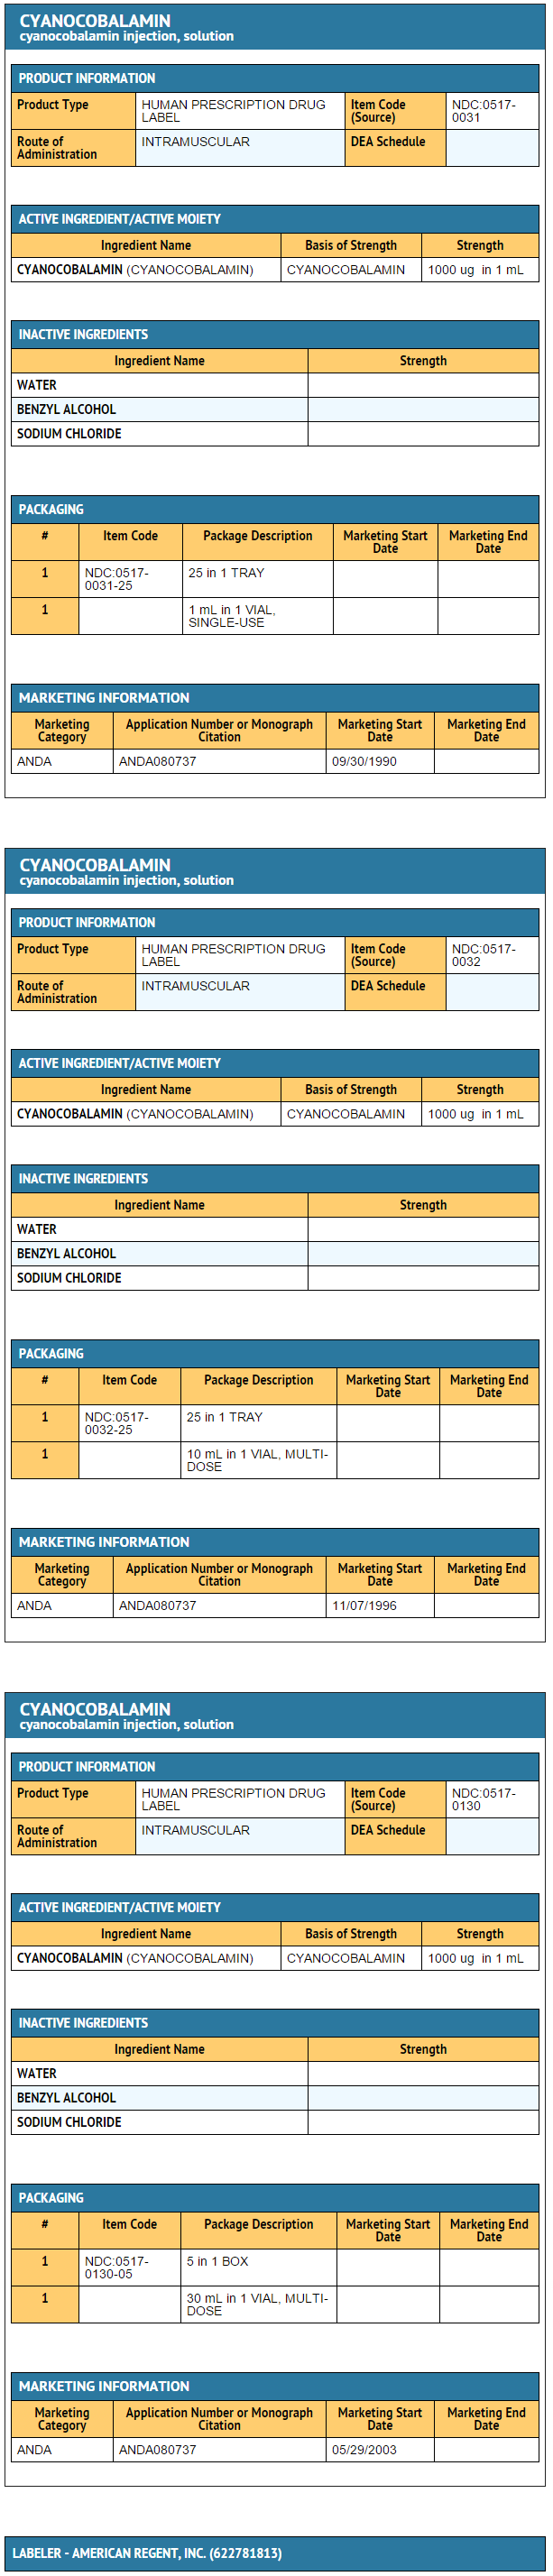 File:Cyanocobalamin FDA package label.png